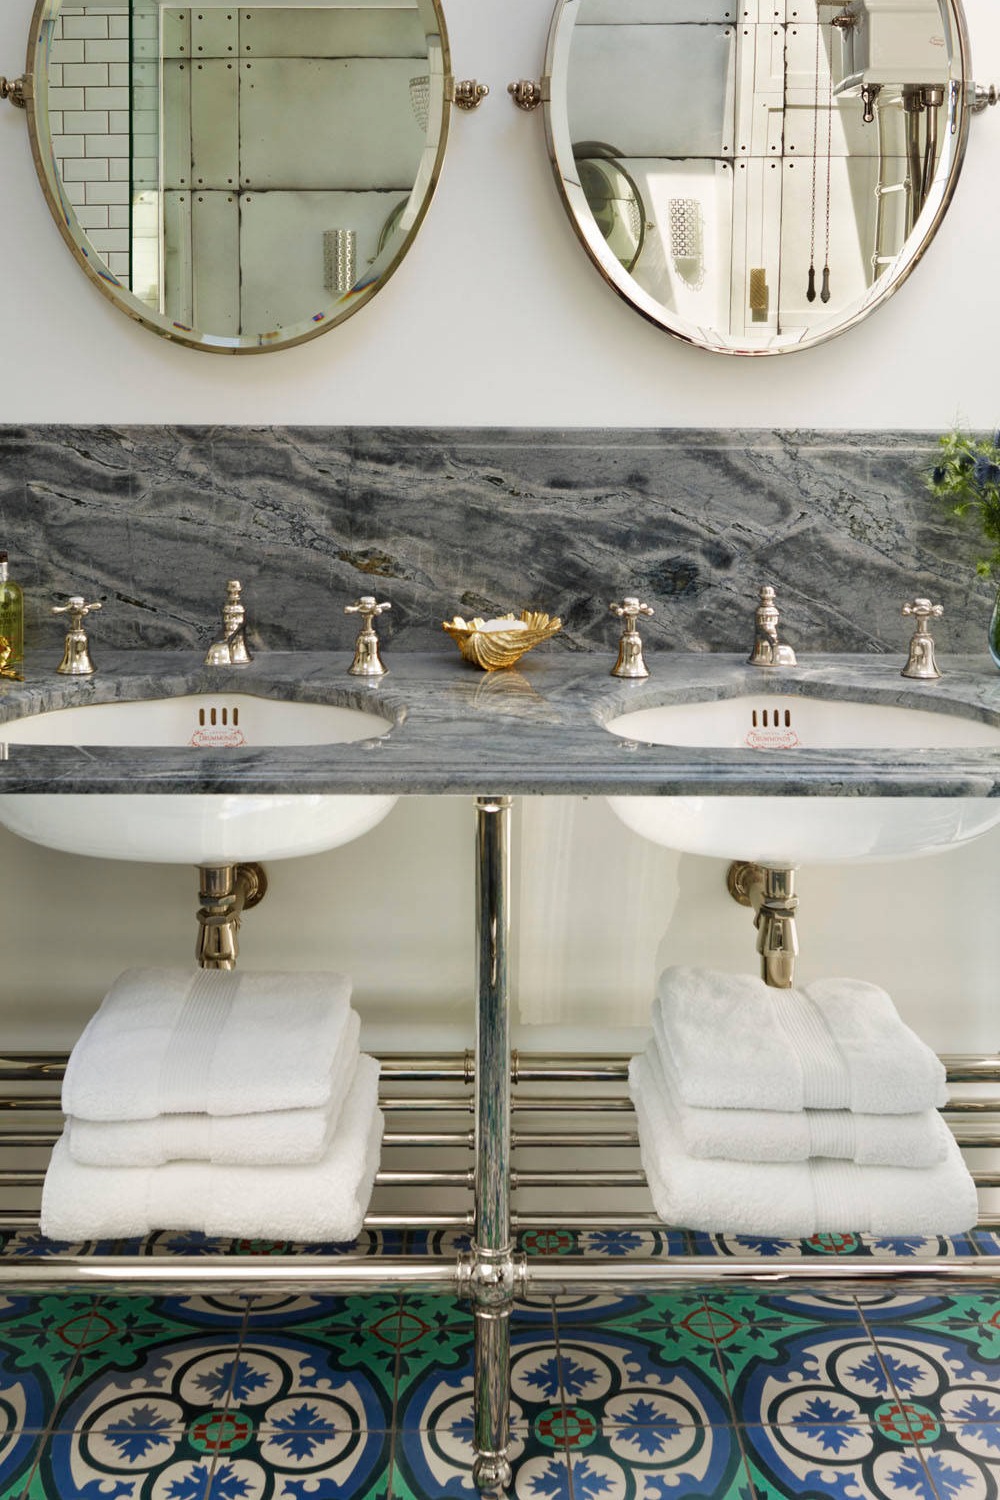 Blue Motif Floor Tiles Porcelain Sinks Marble Countertop Oval Mirrors Towel Rock